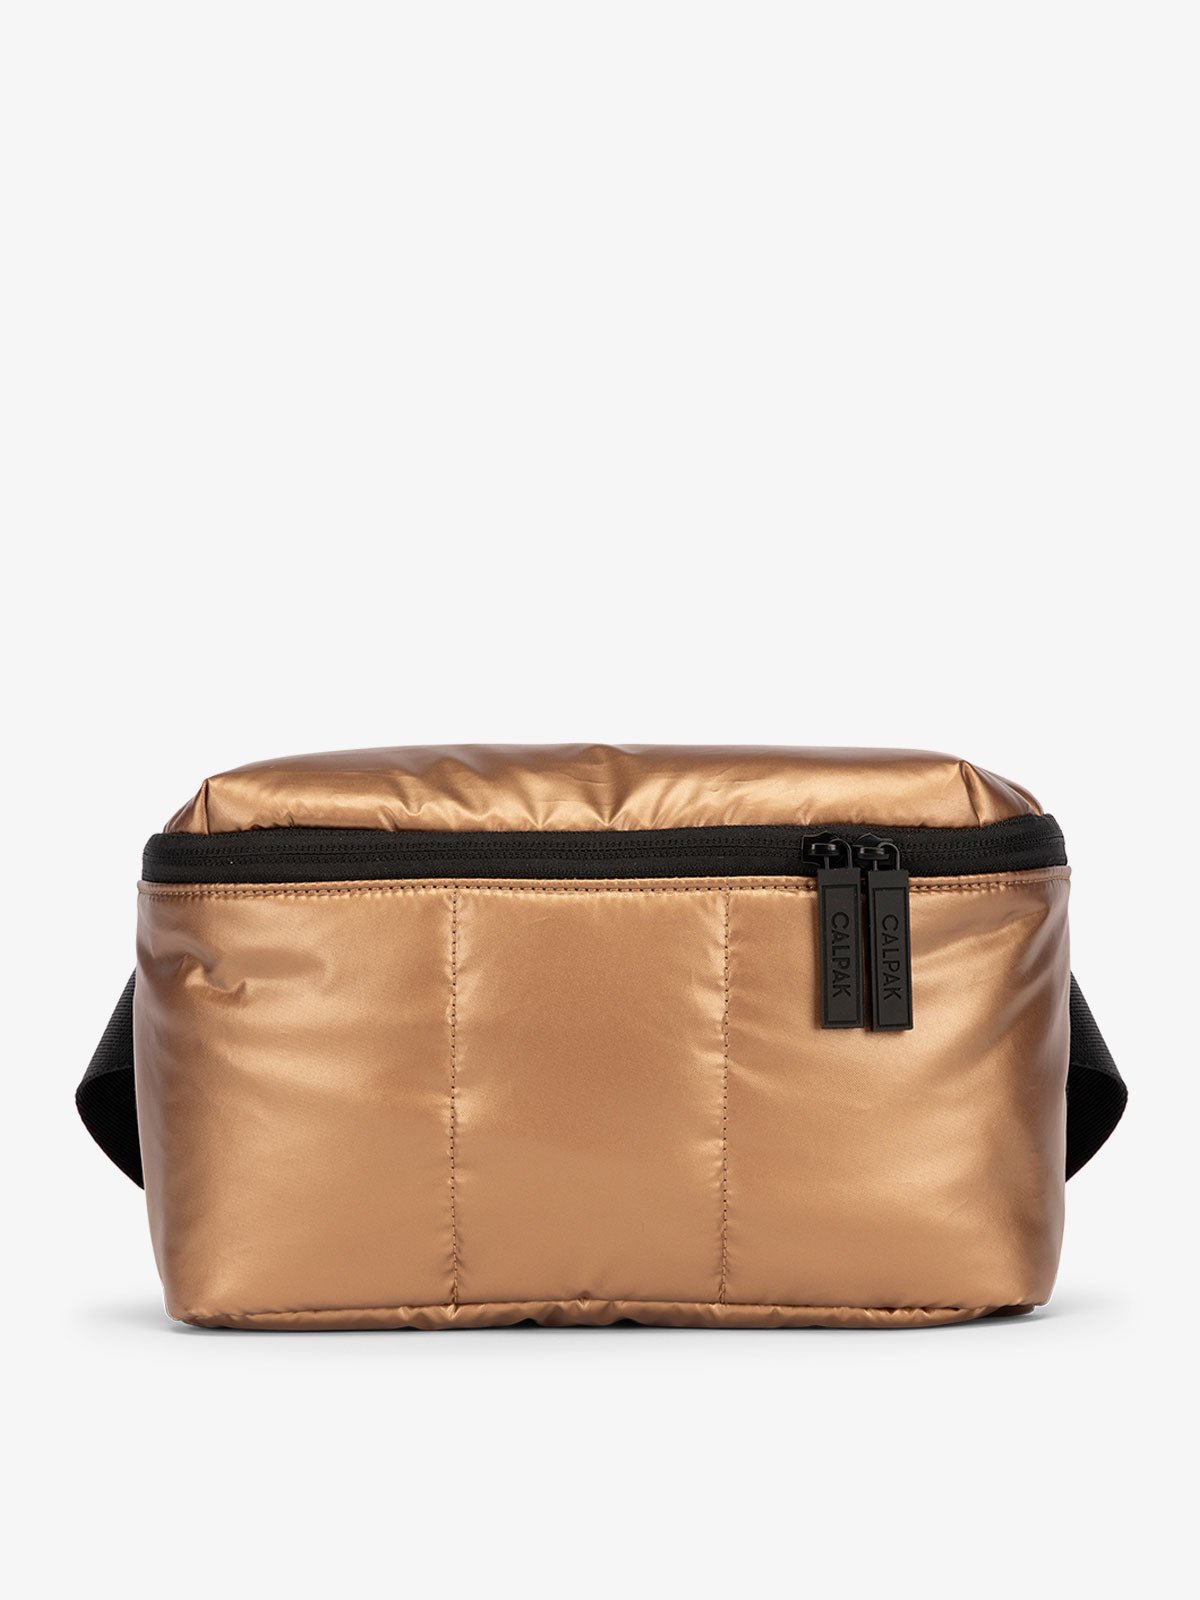 CALPAK Luka Belt Bag with soft puffy exterior in metallic brown copper